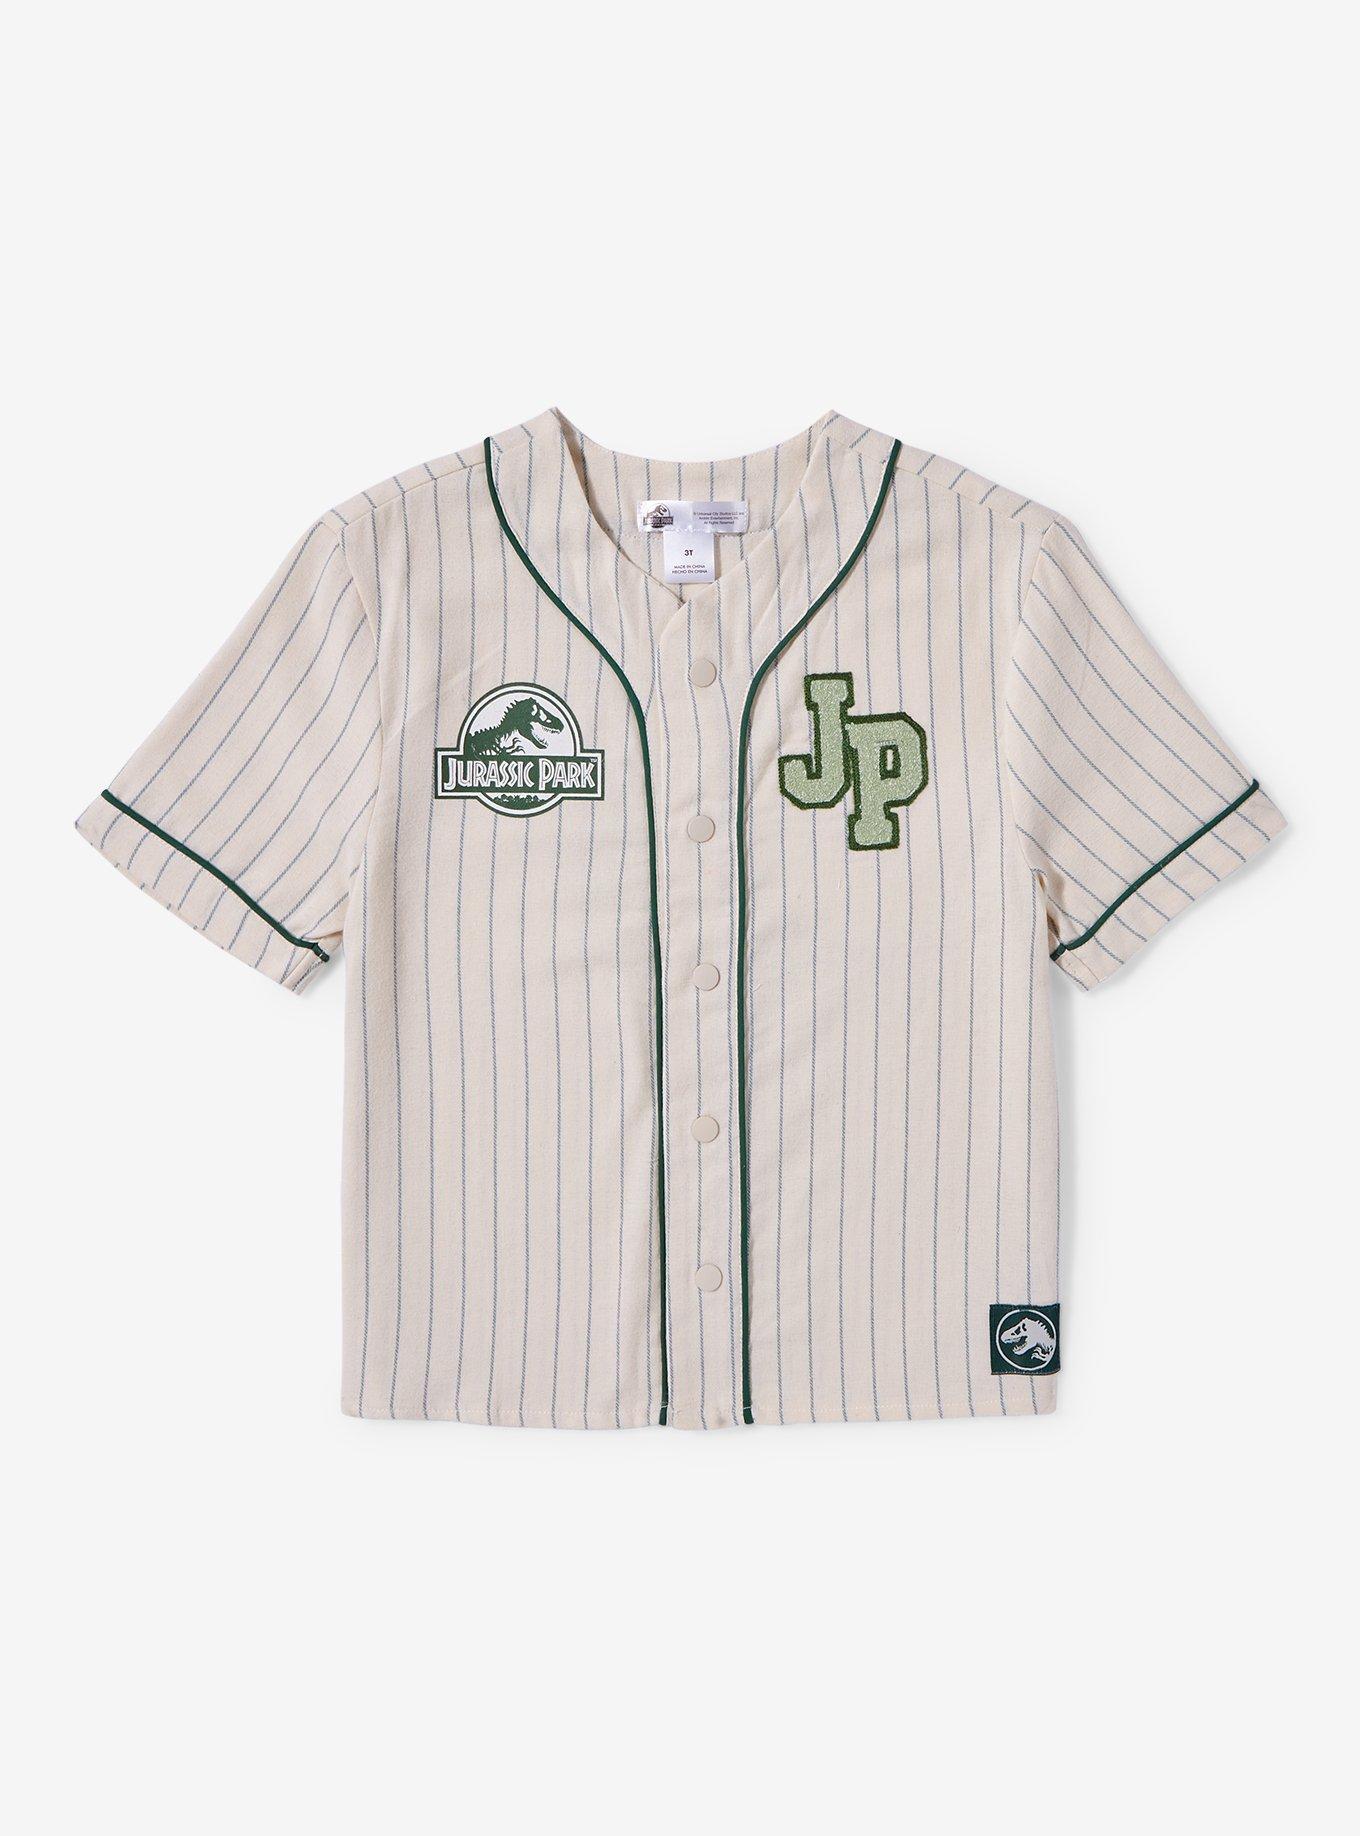 Jurassic Park Dinosaur Toddler Baseball Jersey — BoxLunch Exclusive